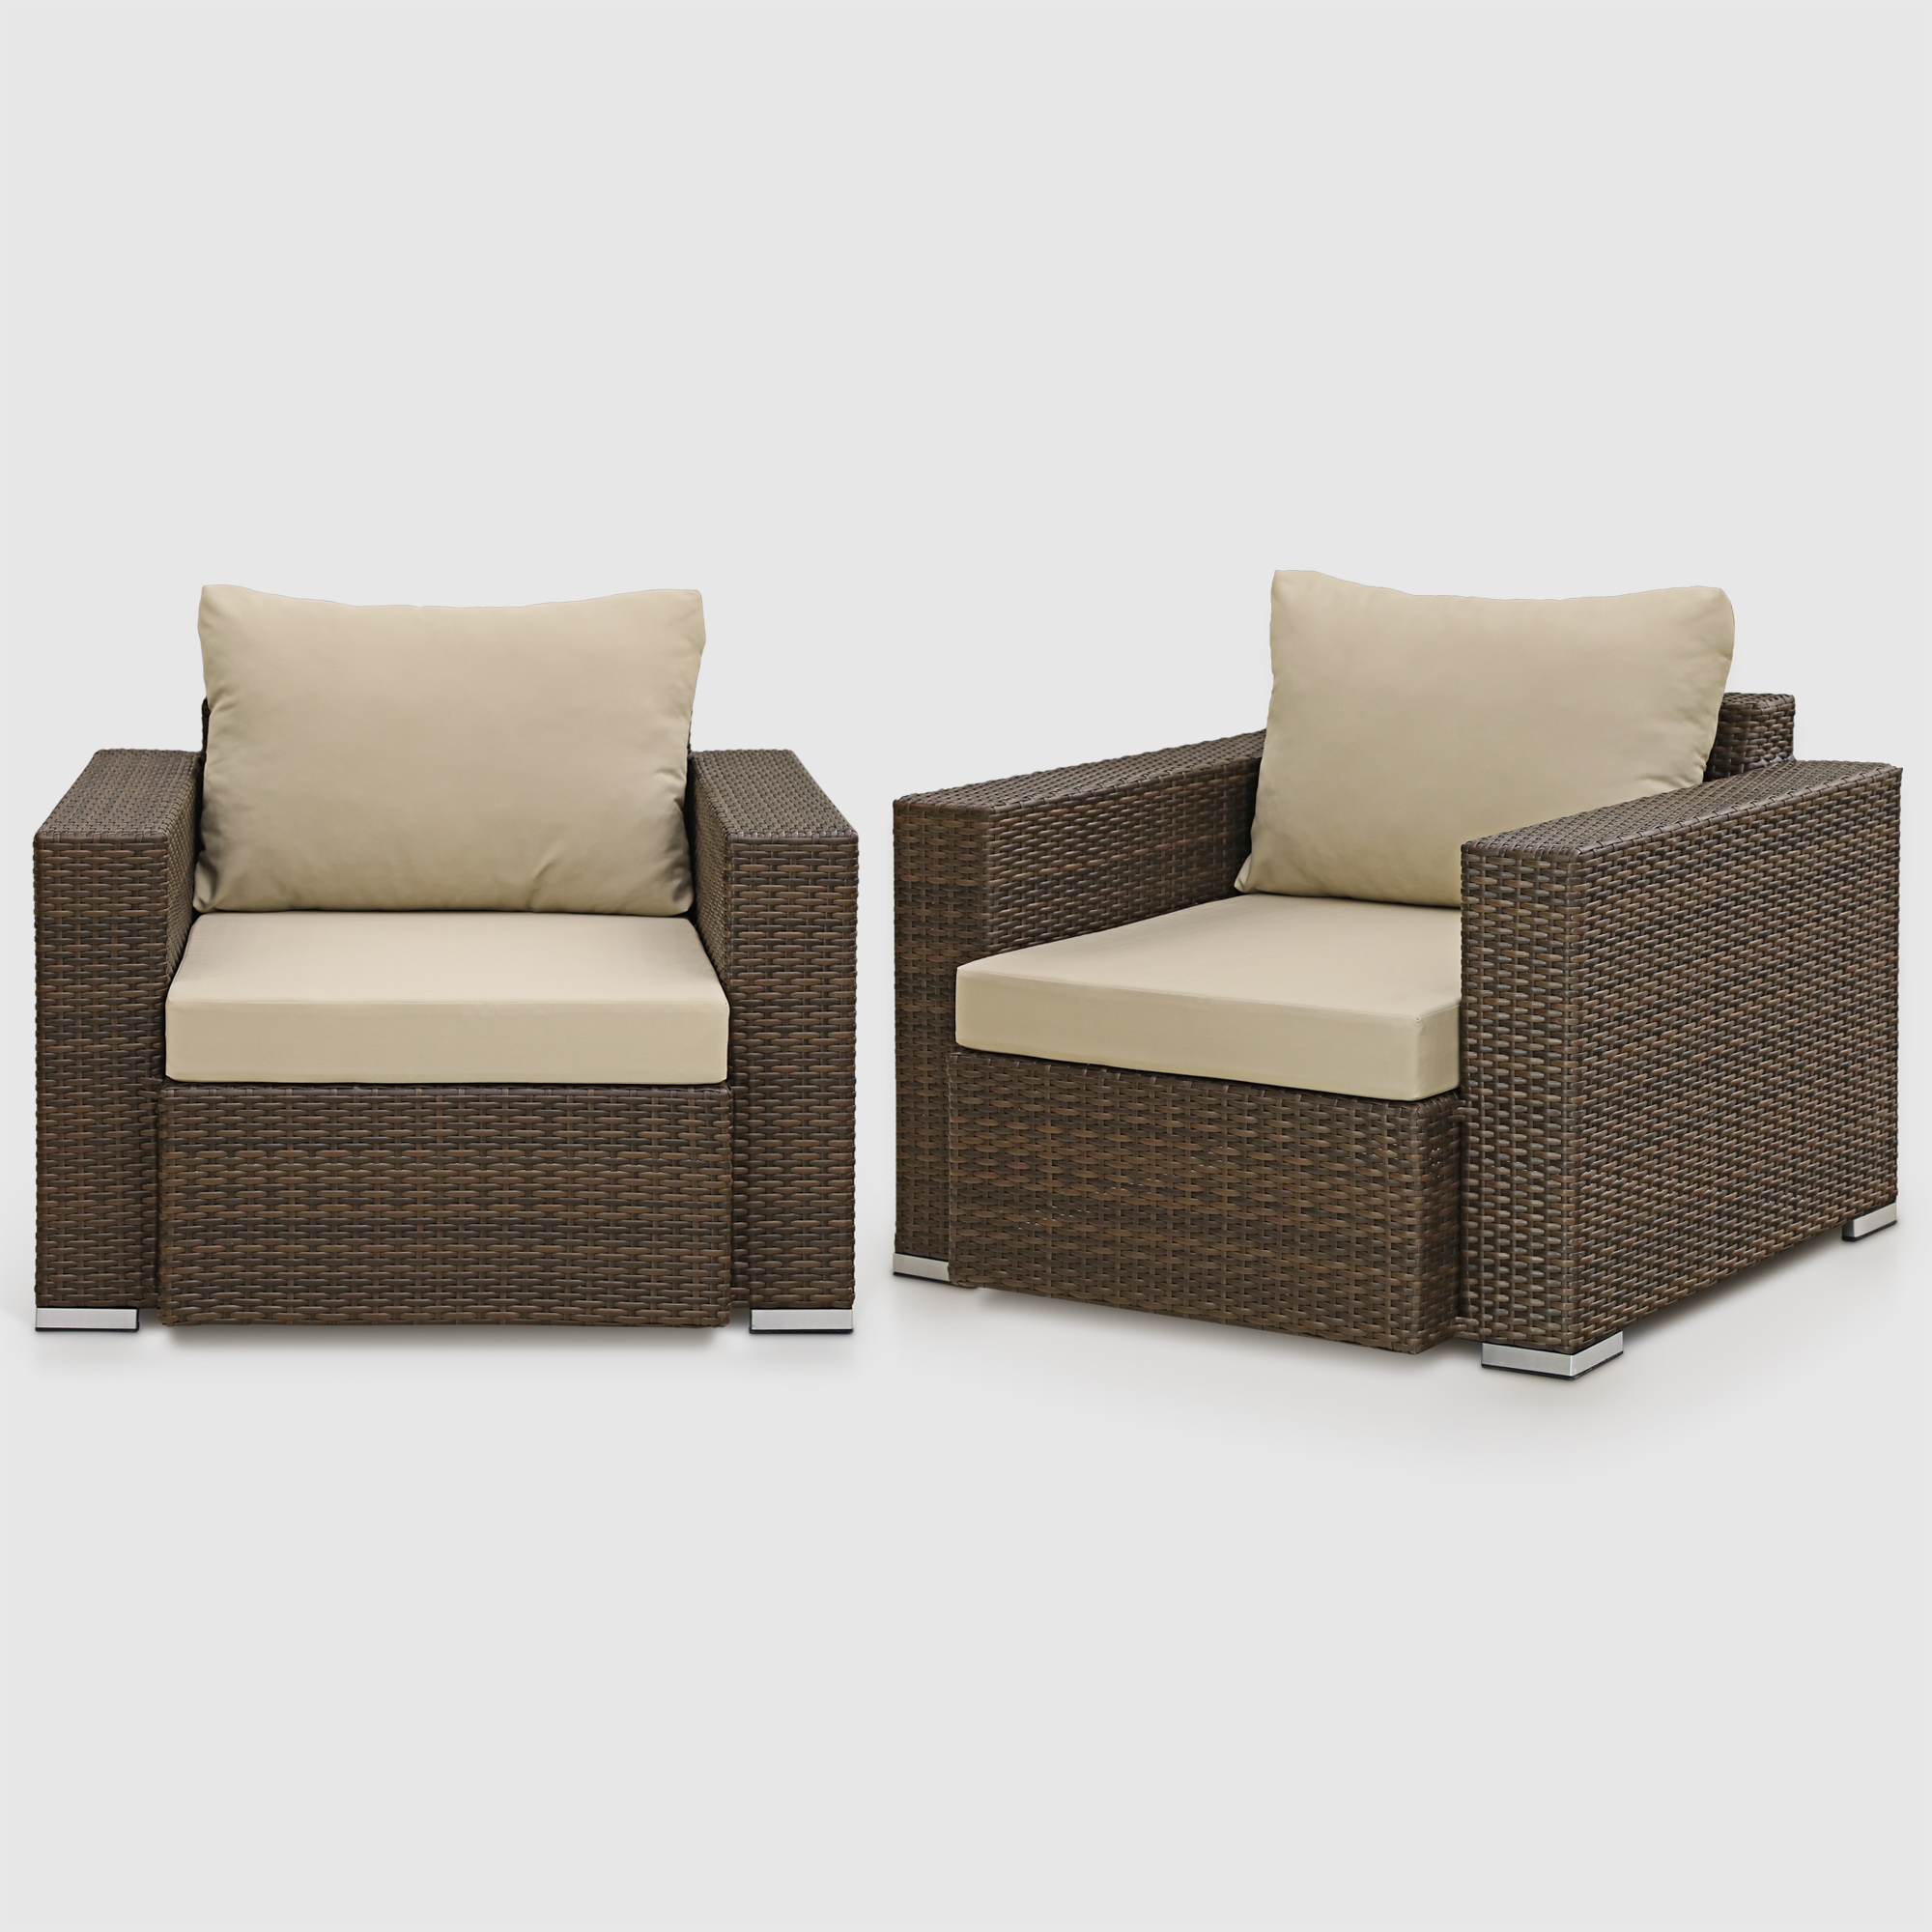 Комплект мебели Ns Rattan Cleo коричневый с бежевым 7 предметов, цвет бежевый, размер 224х88х70 - фото 4